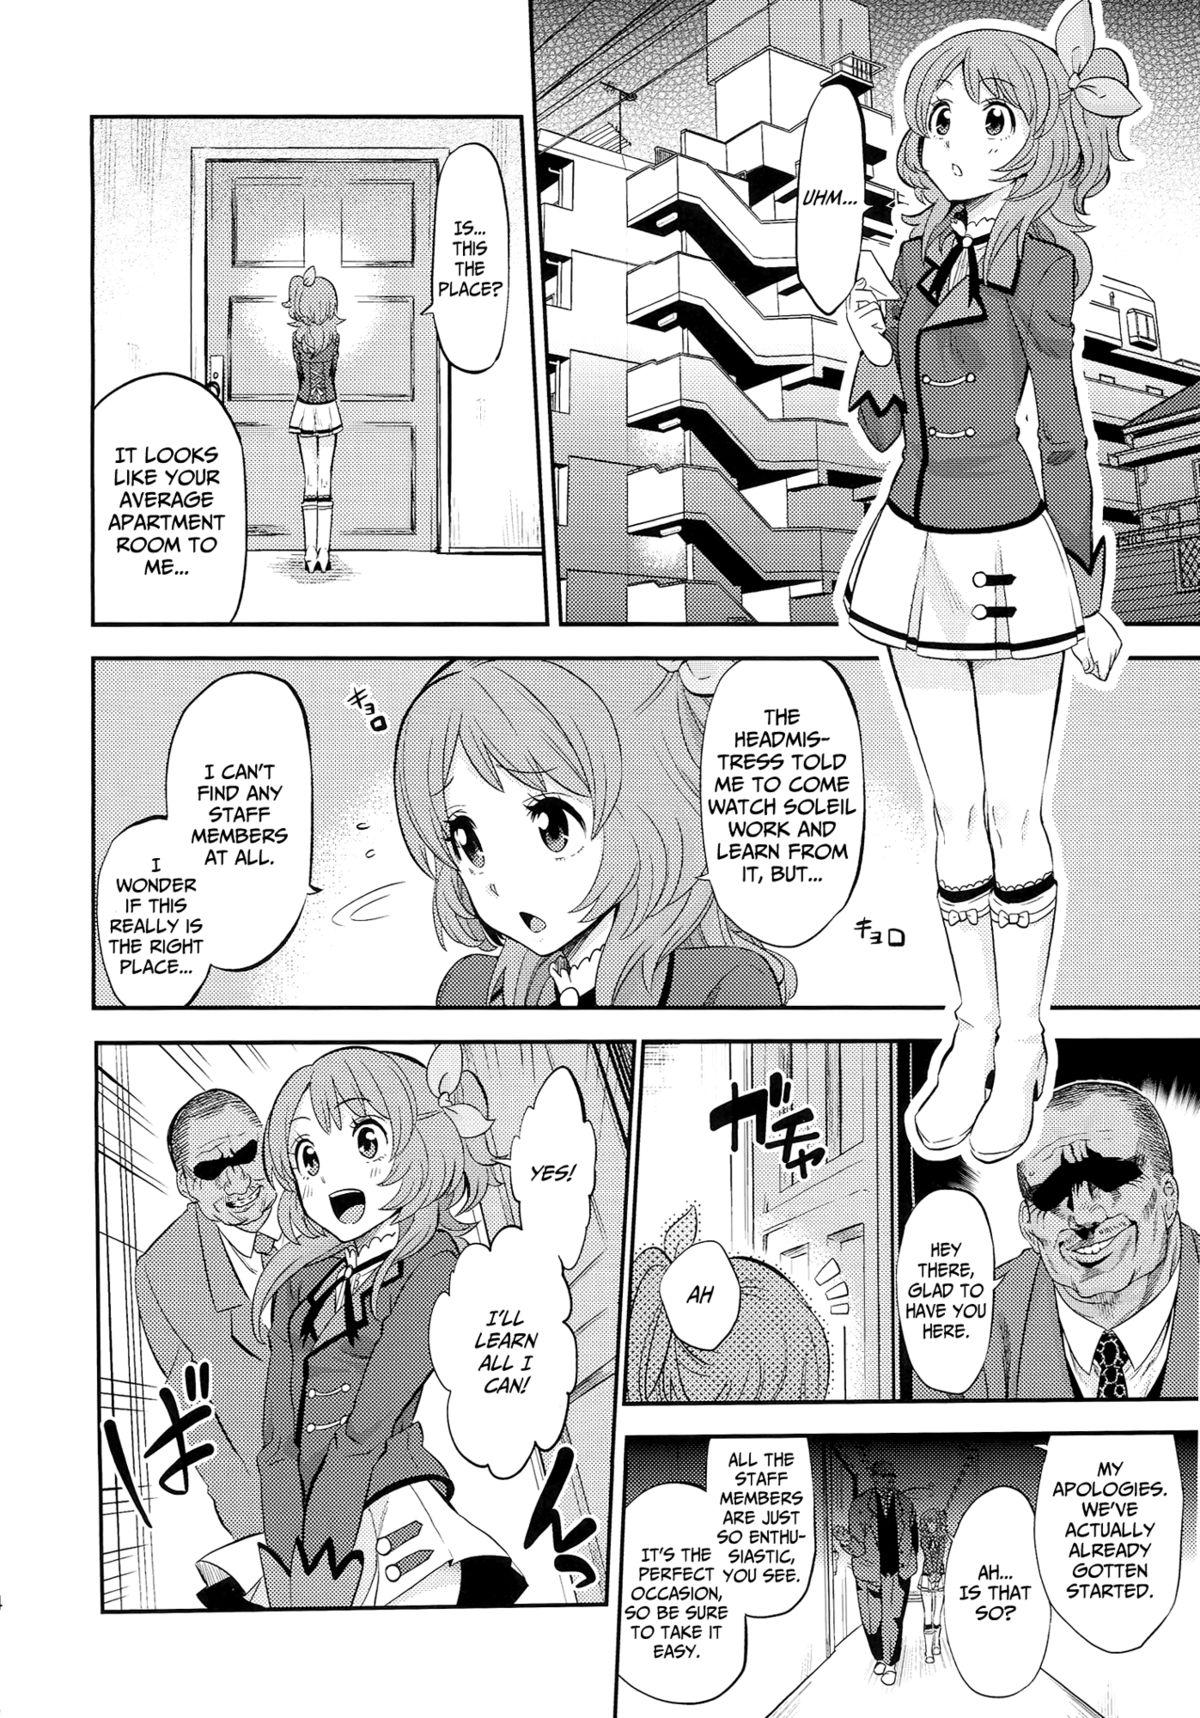 Culazo IT WAS A good EXPERiENCE - Aikatsu Story - Page 3